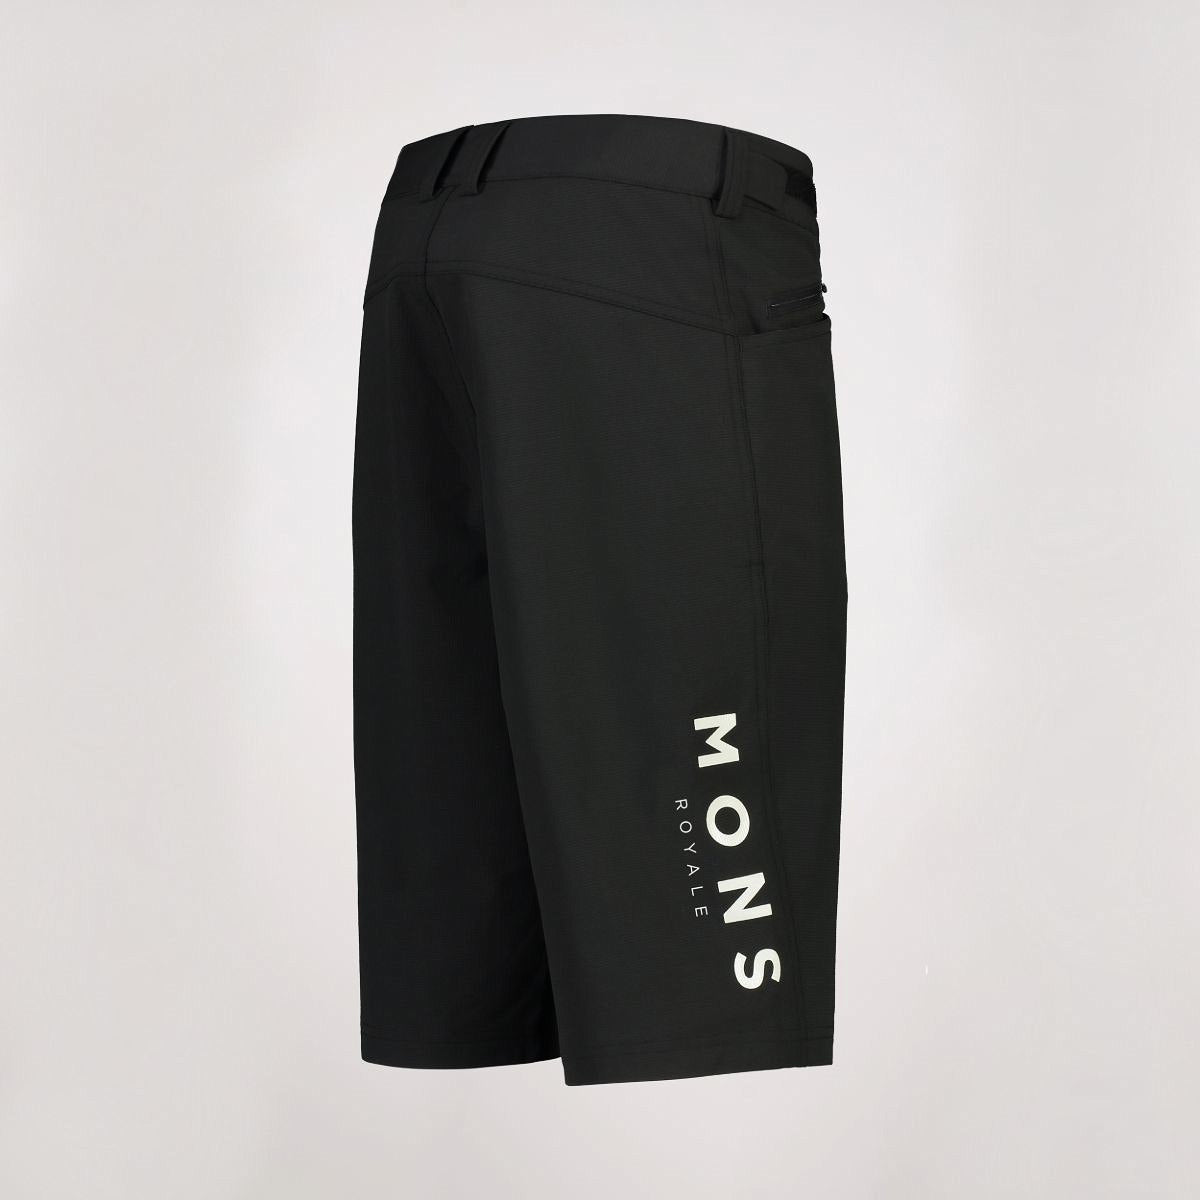 Mons Royale - Men's Momentum 2.0 Bike Shorts - Black